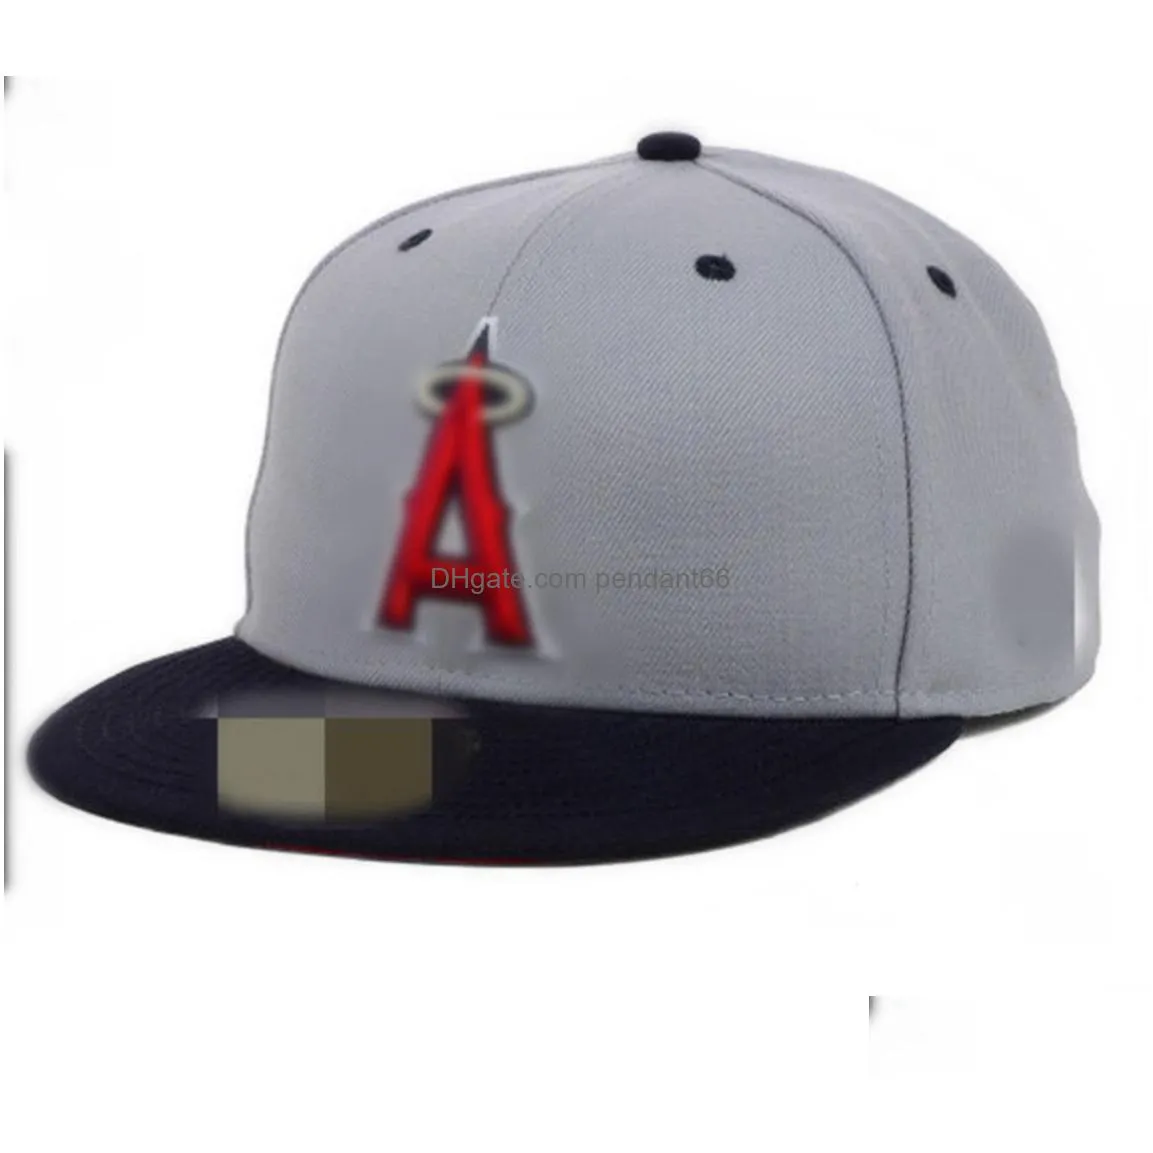 top selling summer angelsa letter baseball caps gorras bones men women casual outdoor sport fitted hats h6-7.14